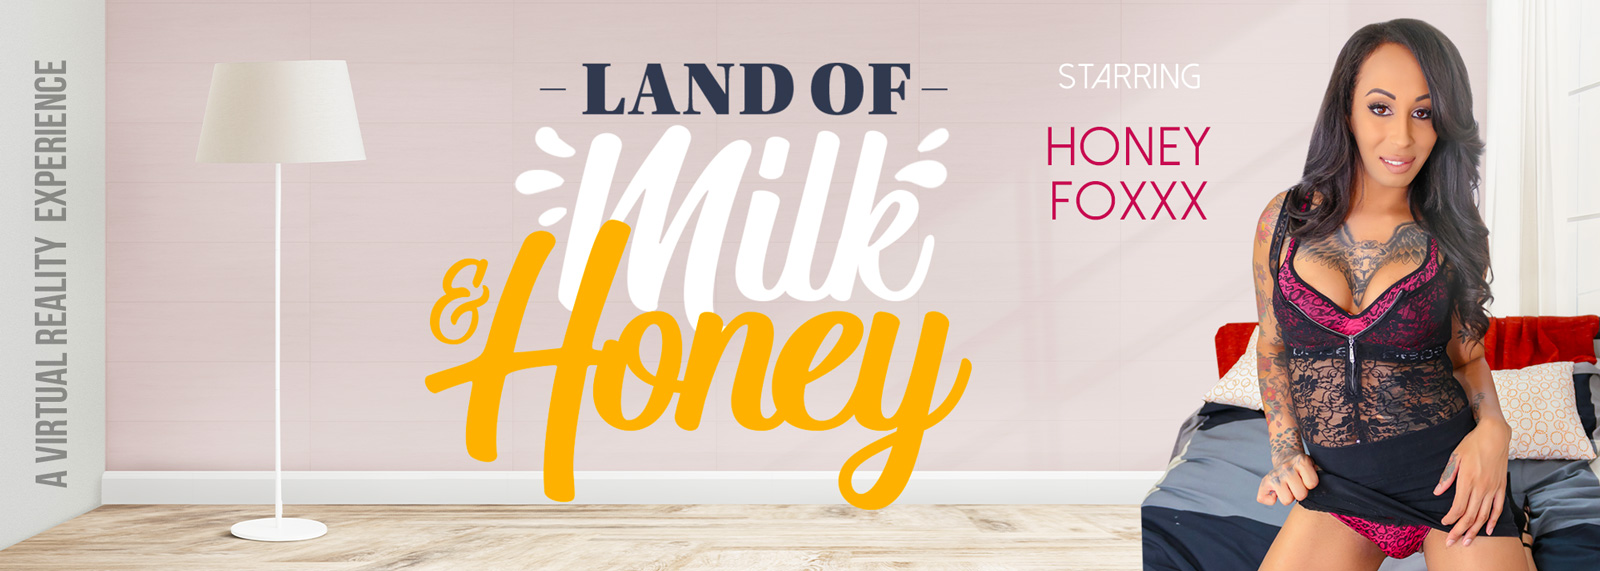 Land of Milk and Honey - VR Porn Video, Starring Honey Foxxx VR